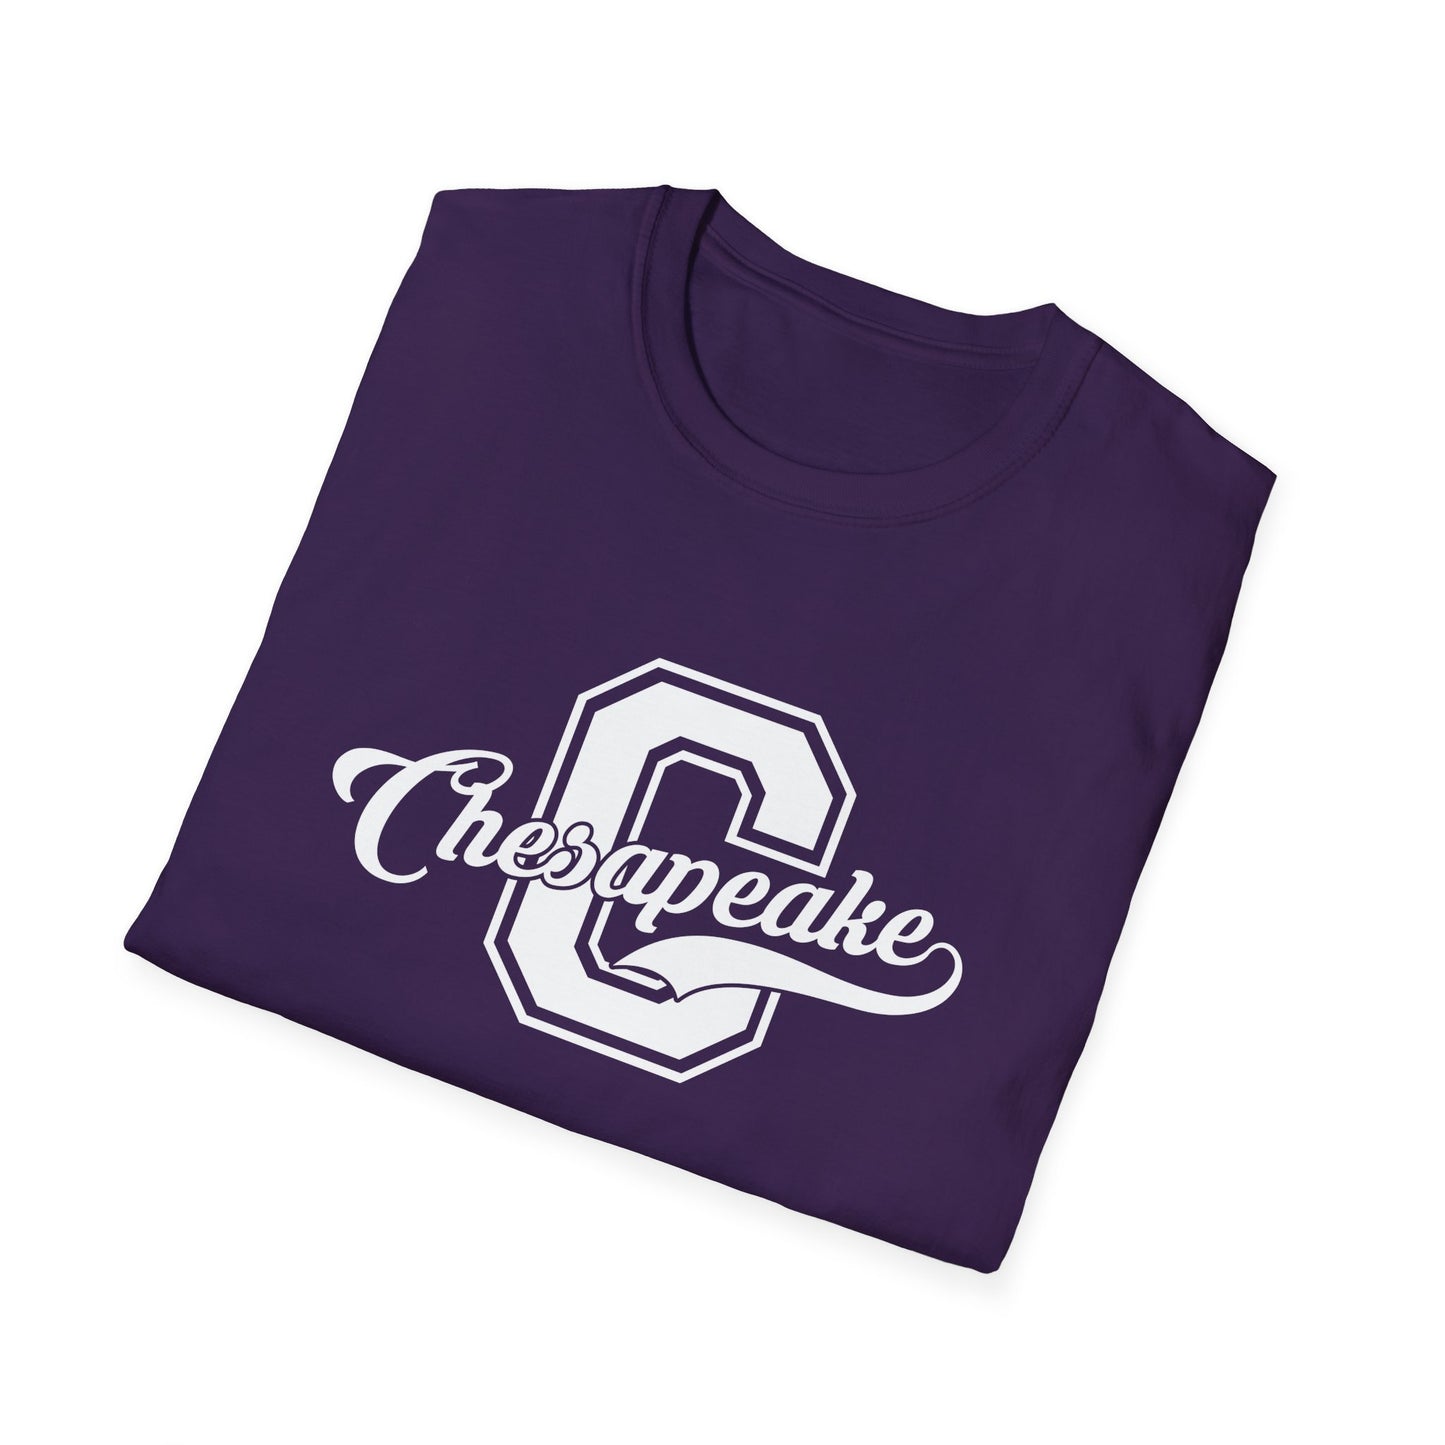 Chesapeake Unisex Softstyle T-Shirt